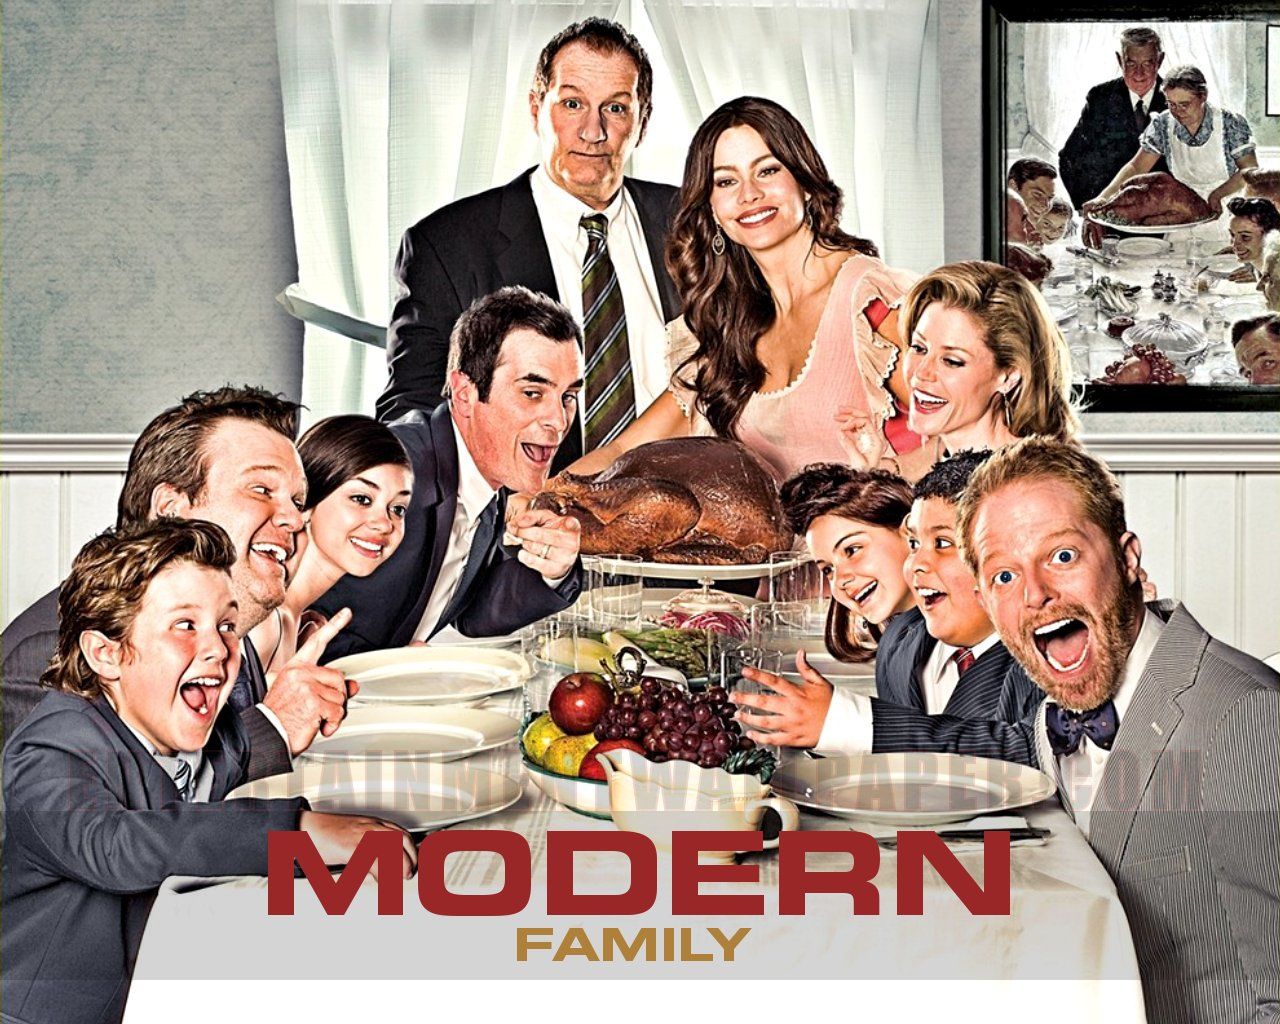 MODERN FAMILY Season 3 Available on Blu-ray/DVD September 18th